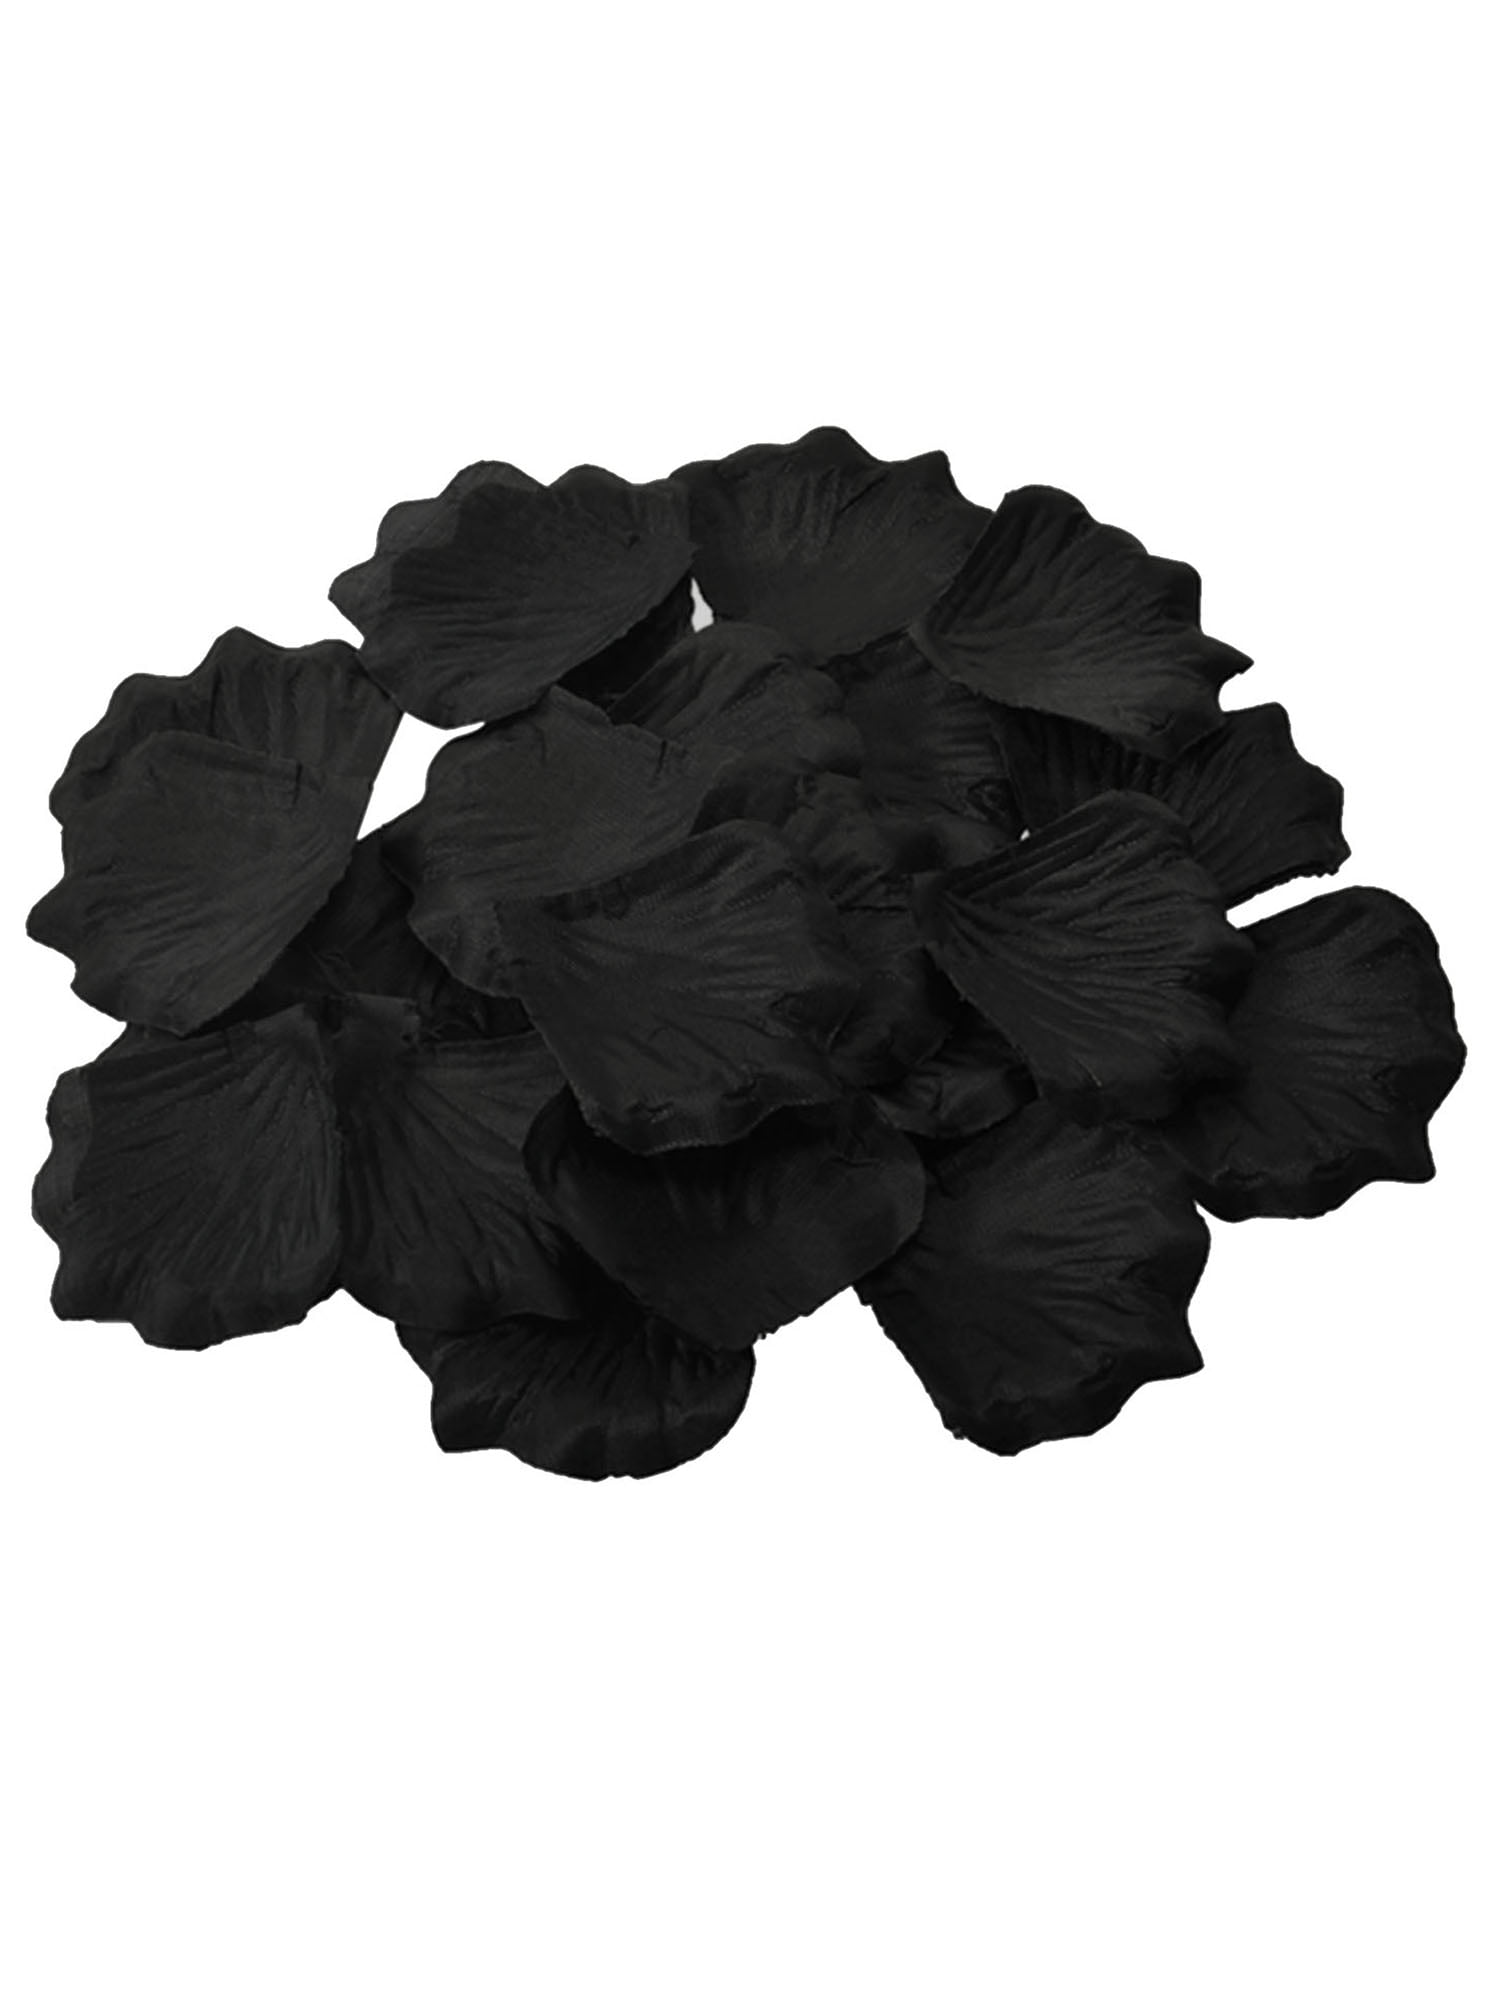 Black Rose Petals, Matte Black Preserved Rose Petals Wedding Confetti,  Decoration, Biodegradable 